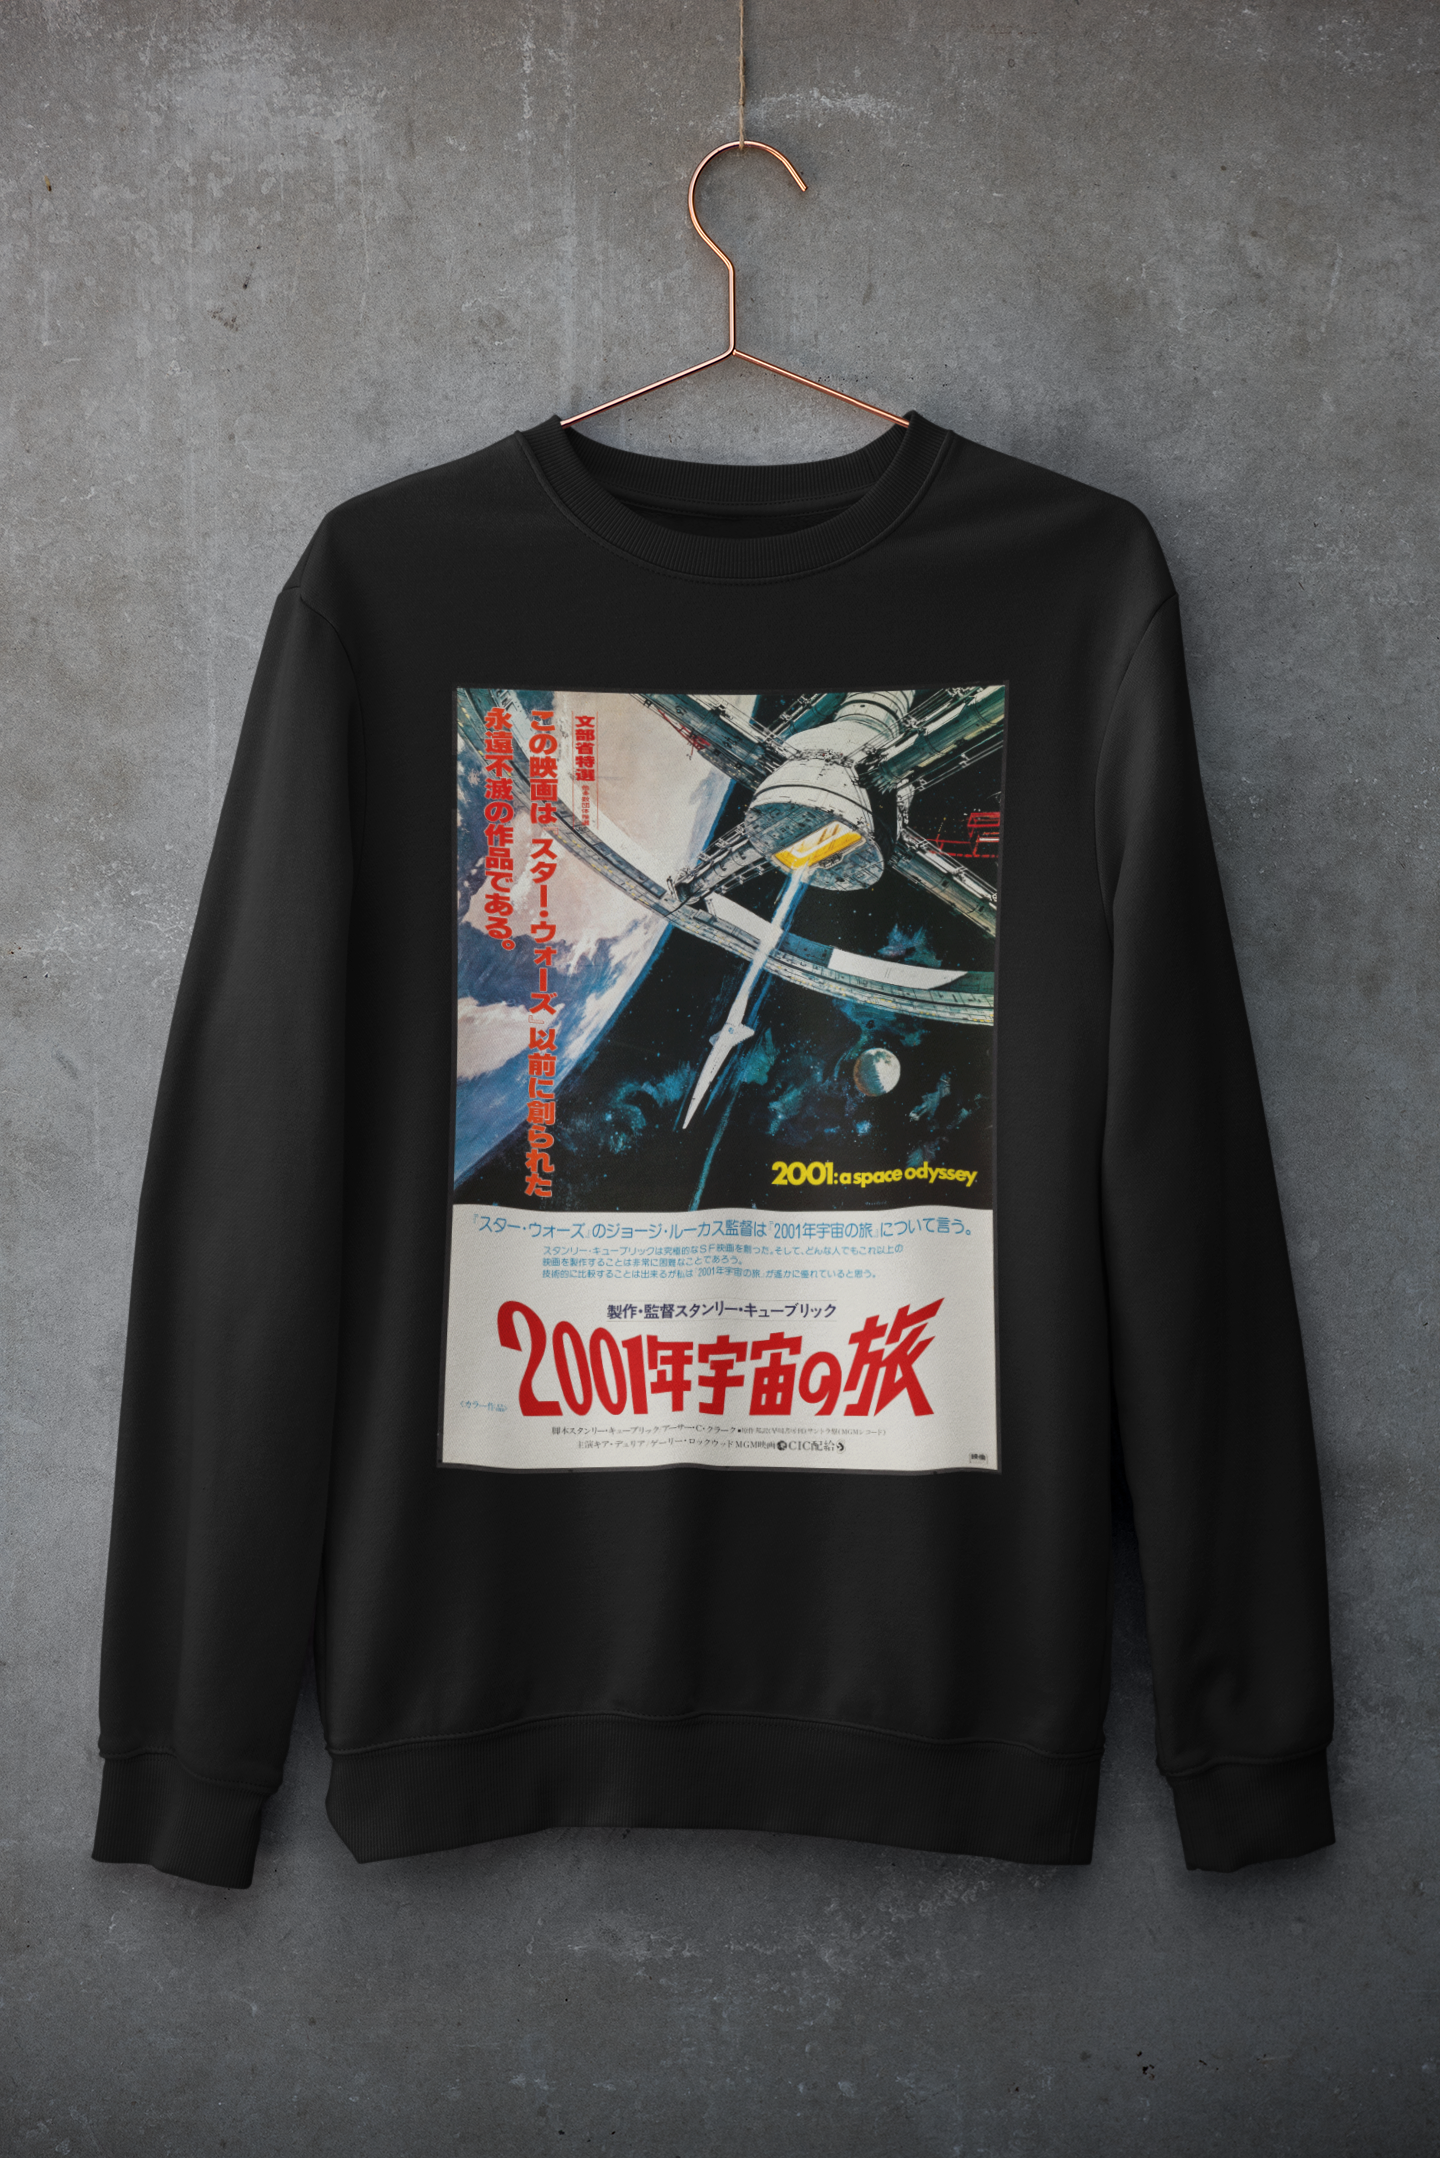 2001: A Space Odyssey Sweatshirt